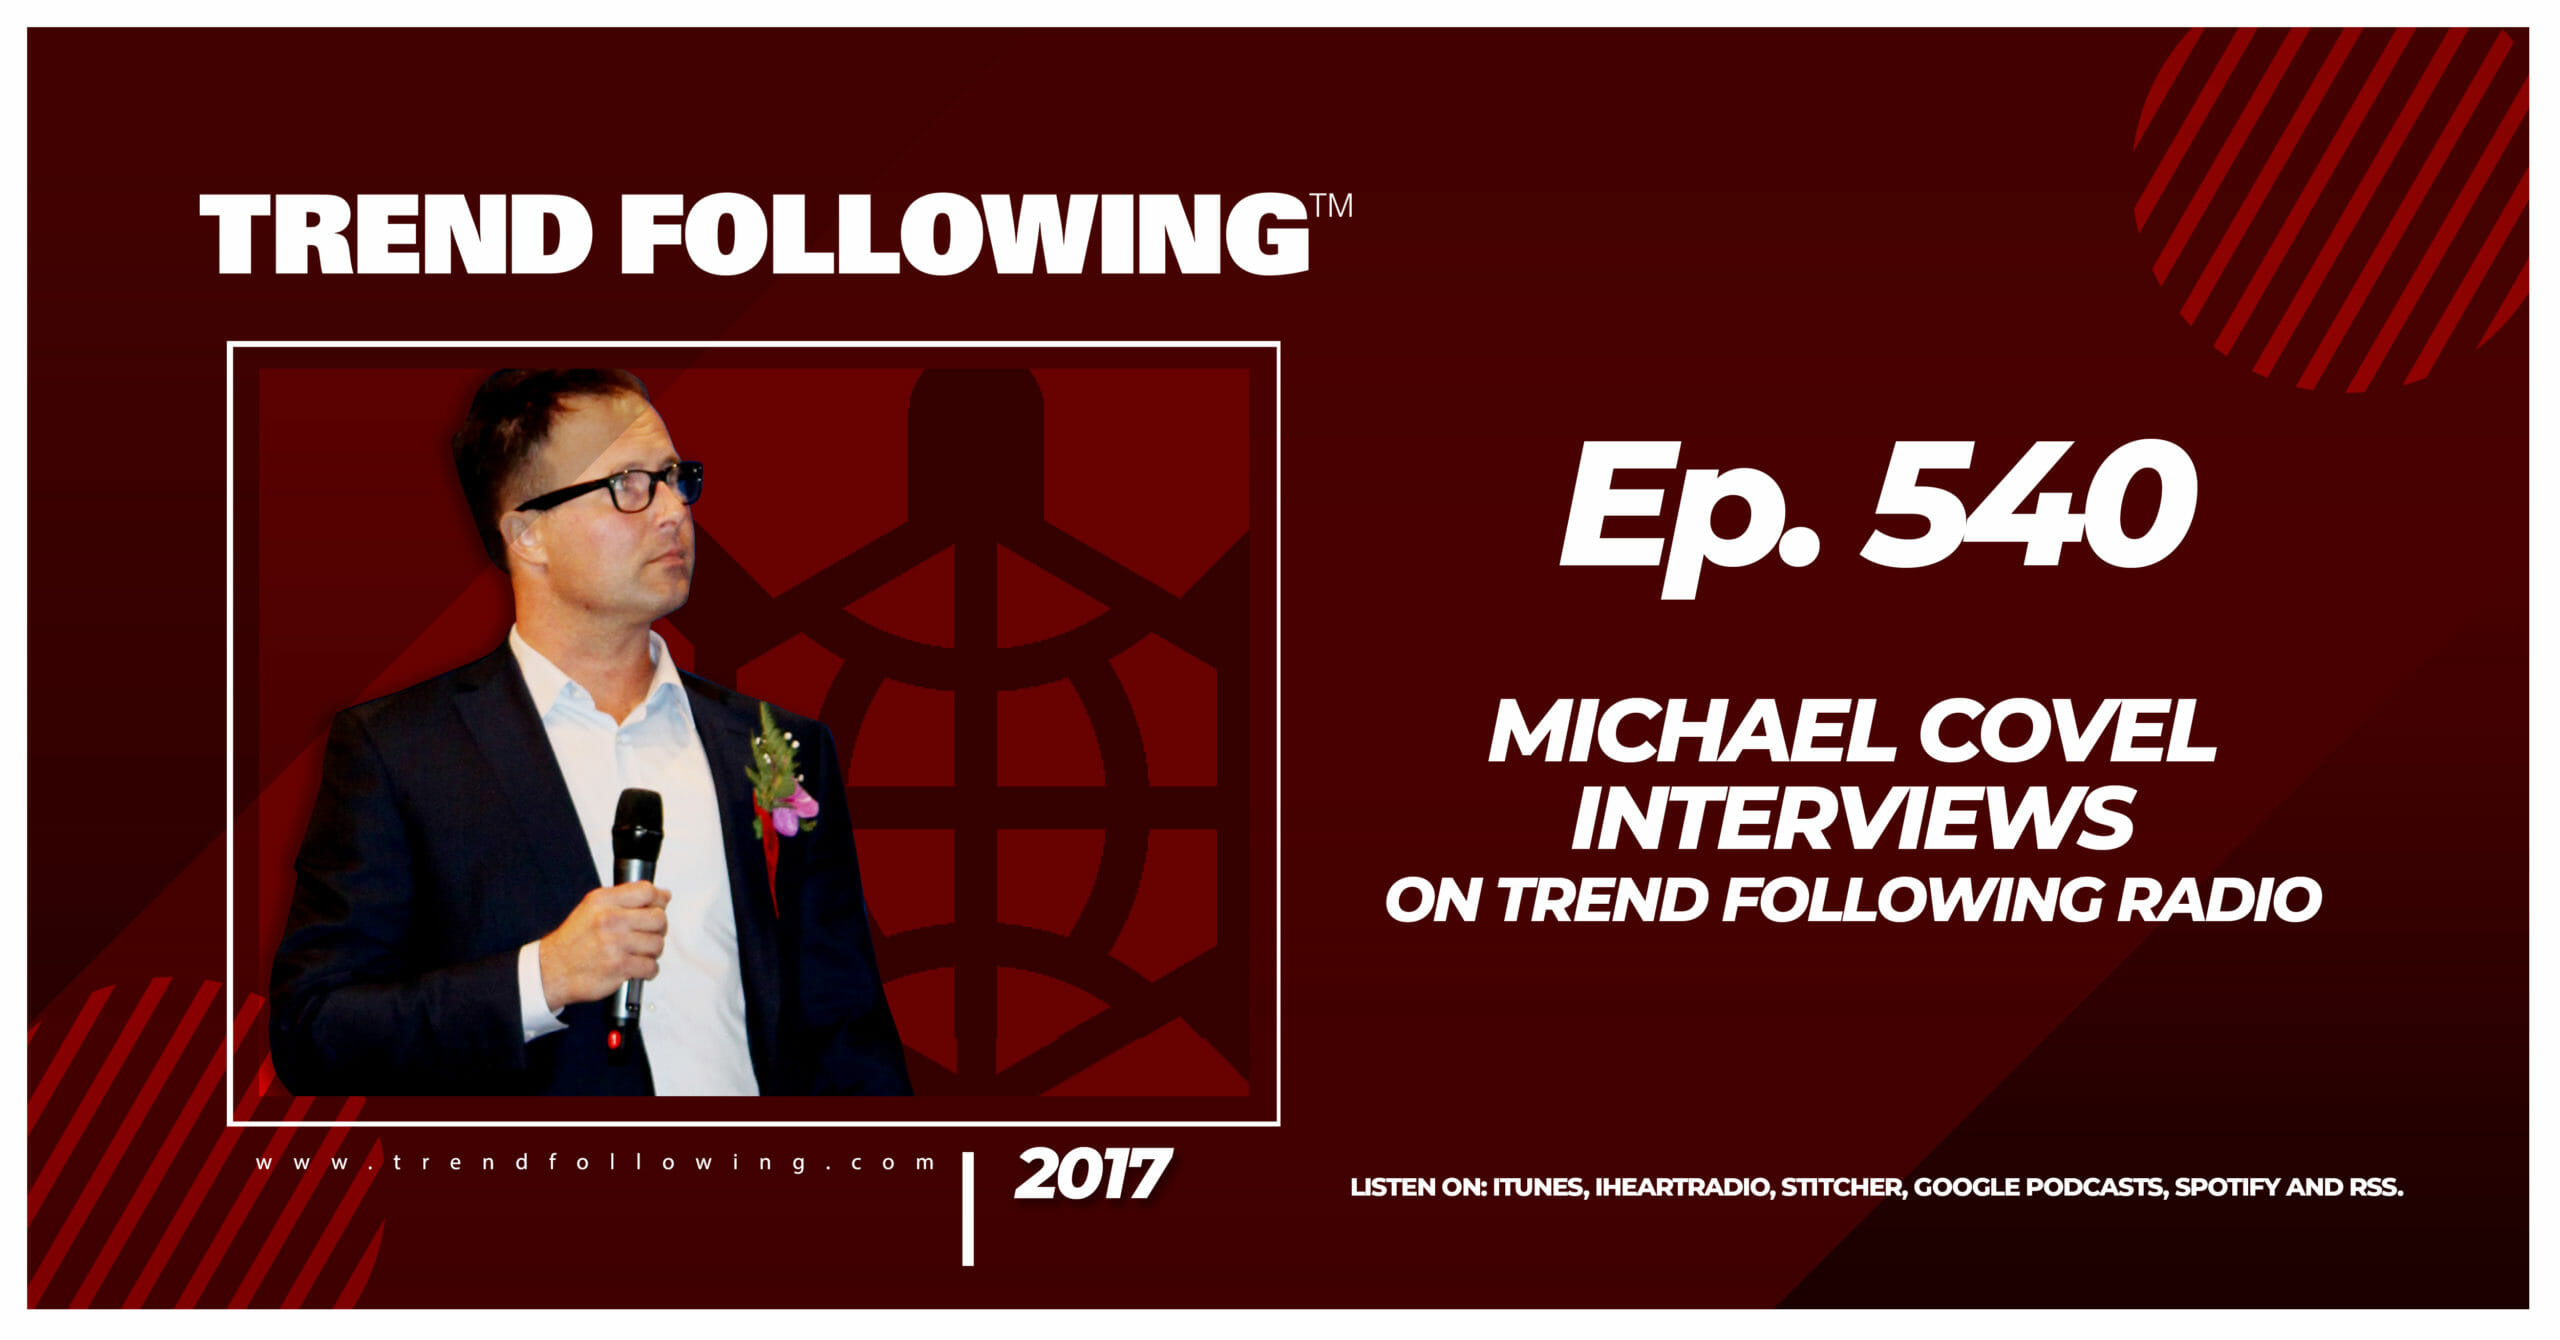 Michael Covel Interviews on Trend Following Radio